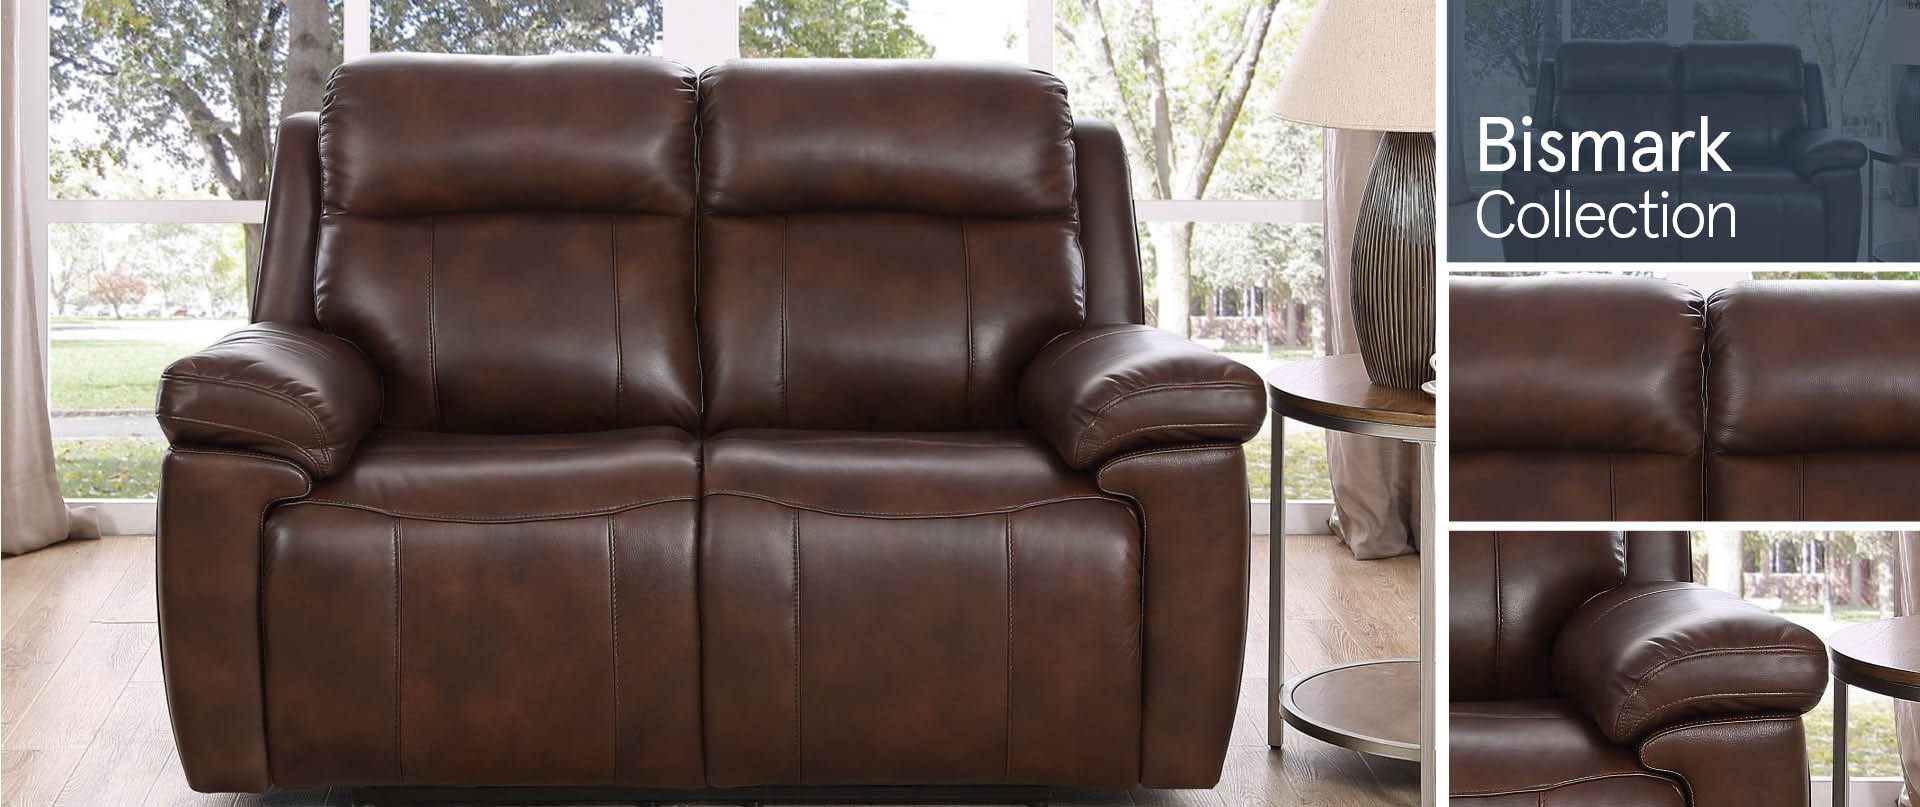 Bismark Leather Sofa Ranges